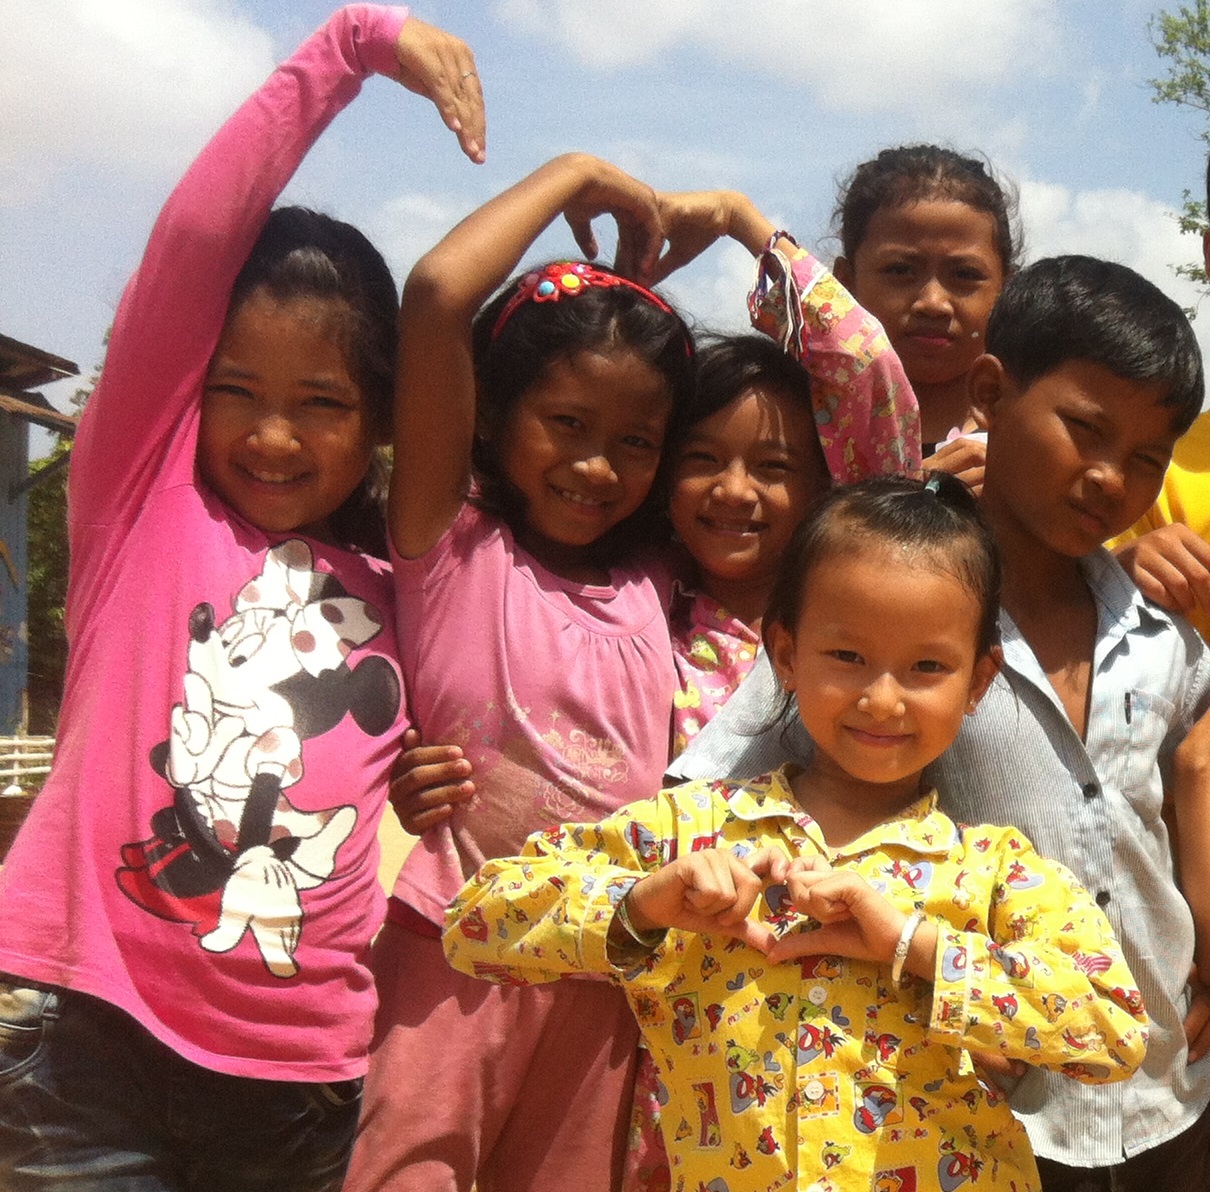 Orphanage children serve as tourist attractions